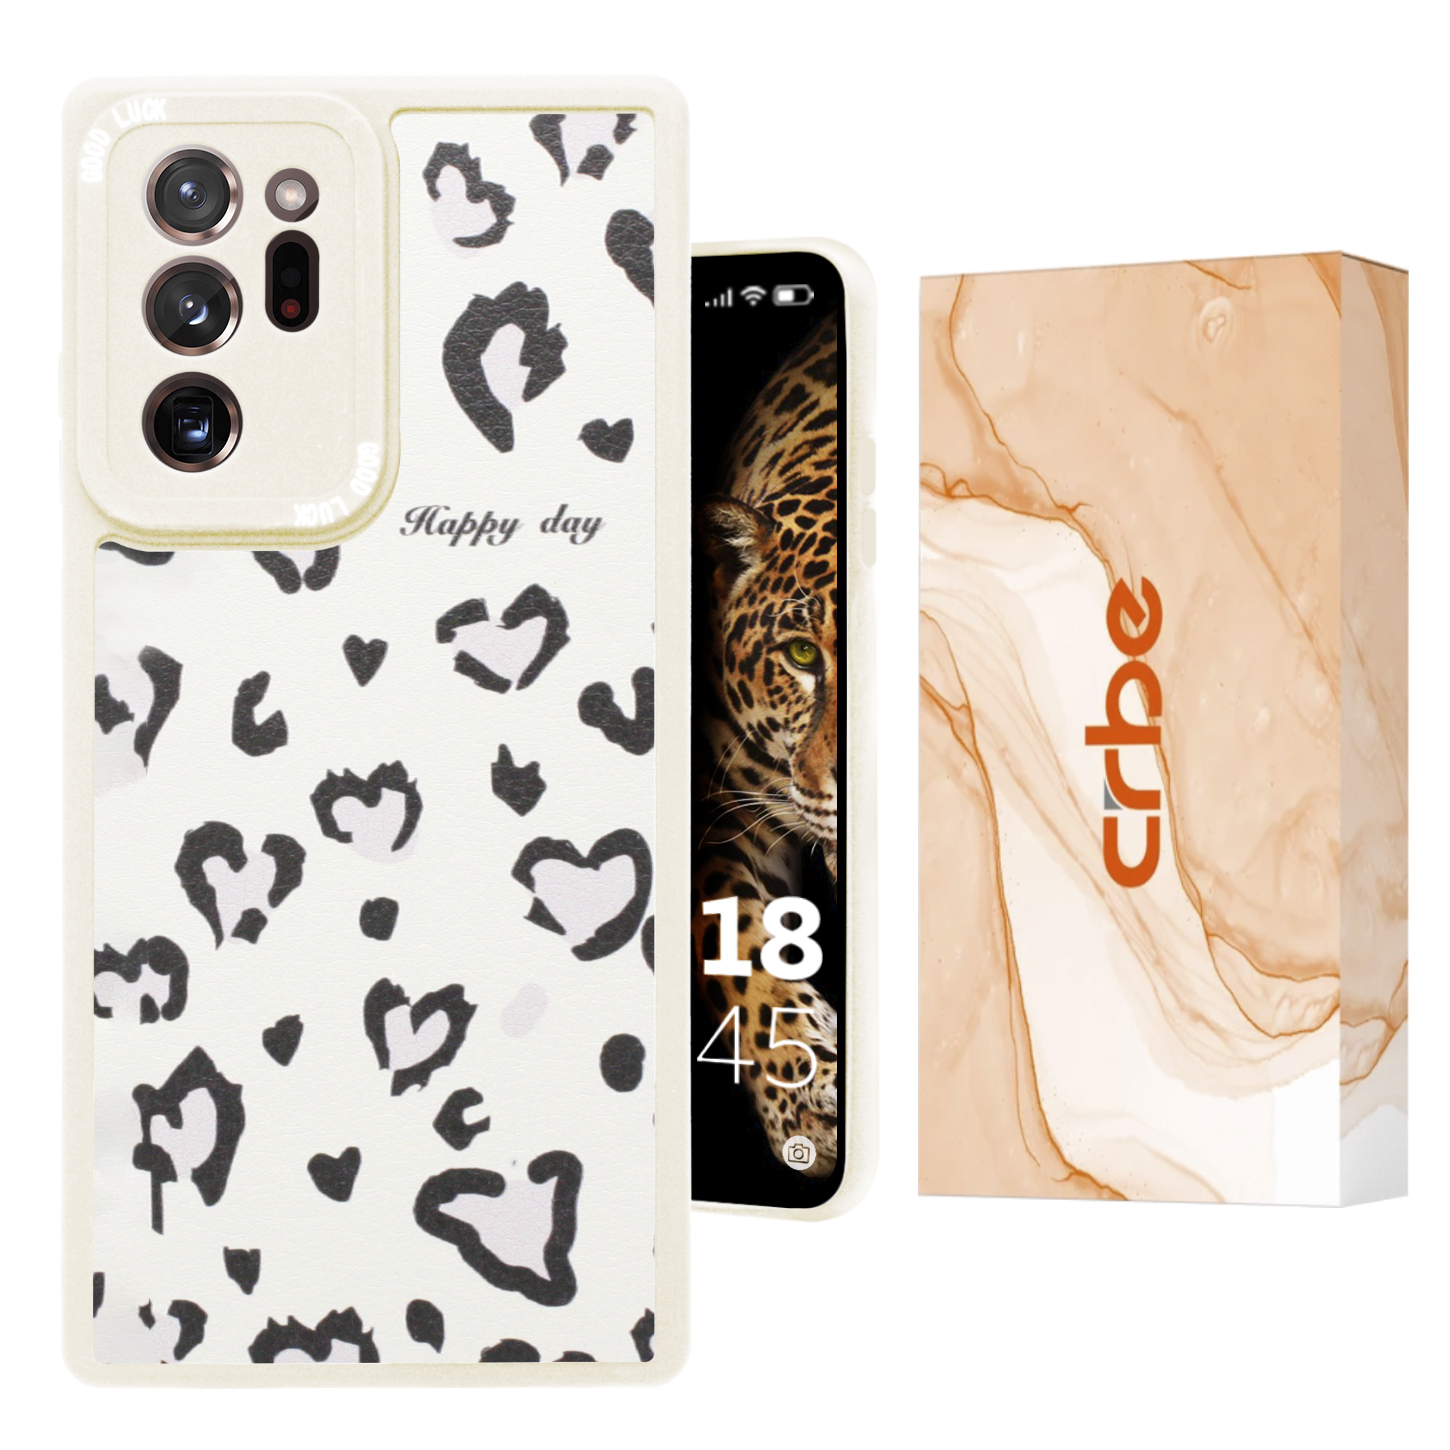  کاور کربی مدل Cheetah مناسب برای گوشی موبایل سامسونگ Galaxy Note 20 Ultra